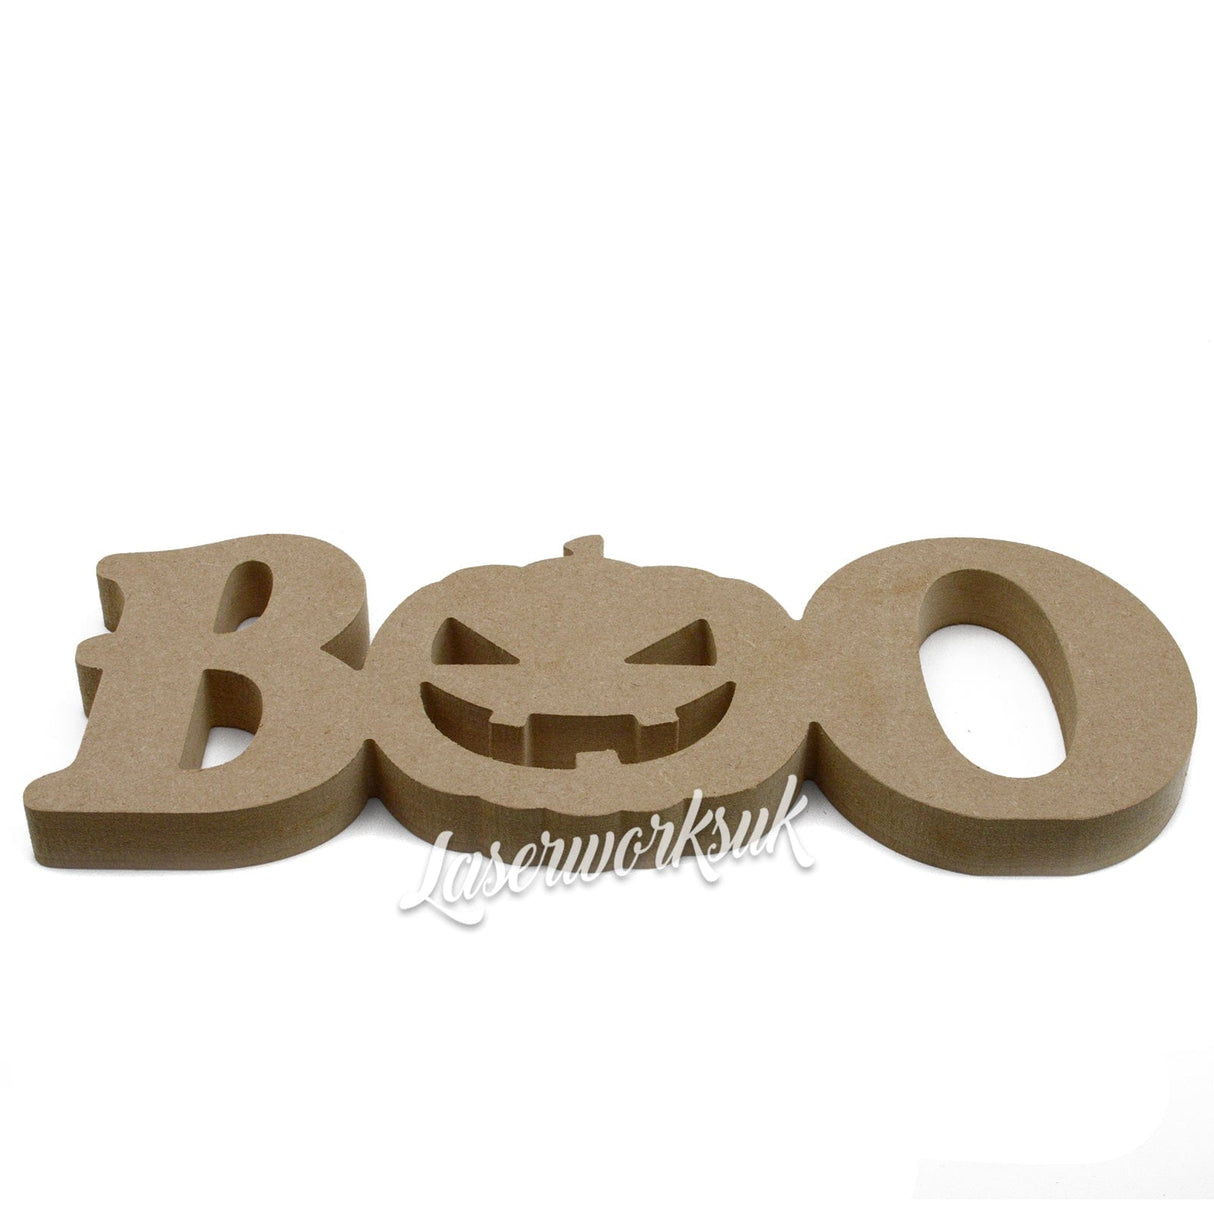 Freestanding Word Boo - Halloween Craft Sign - Laserworksuk